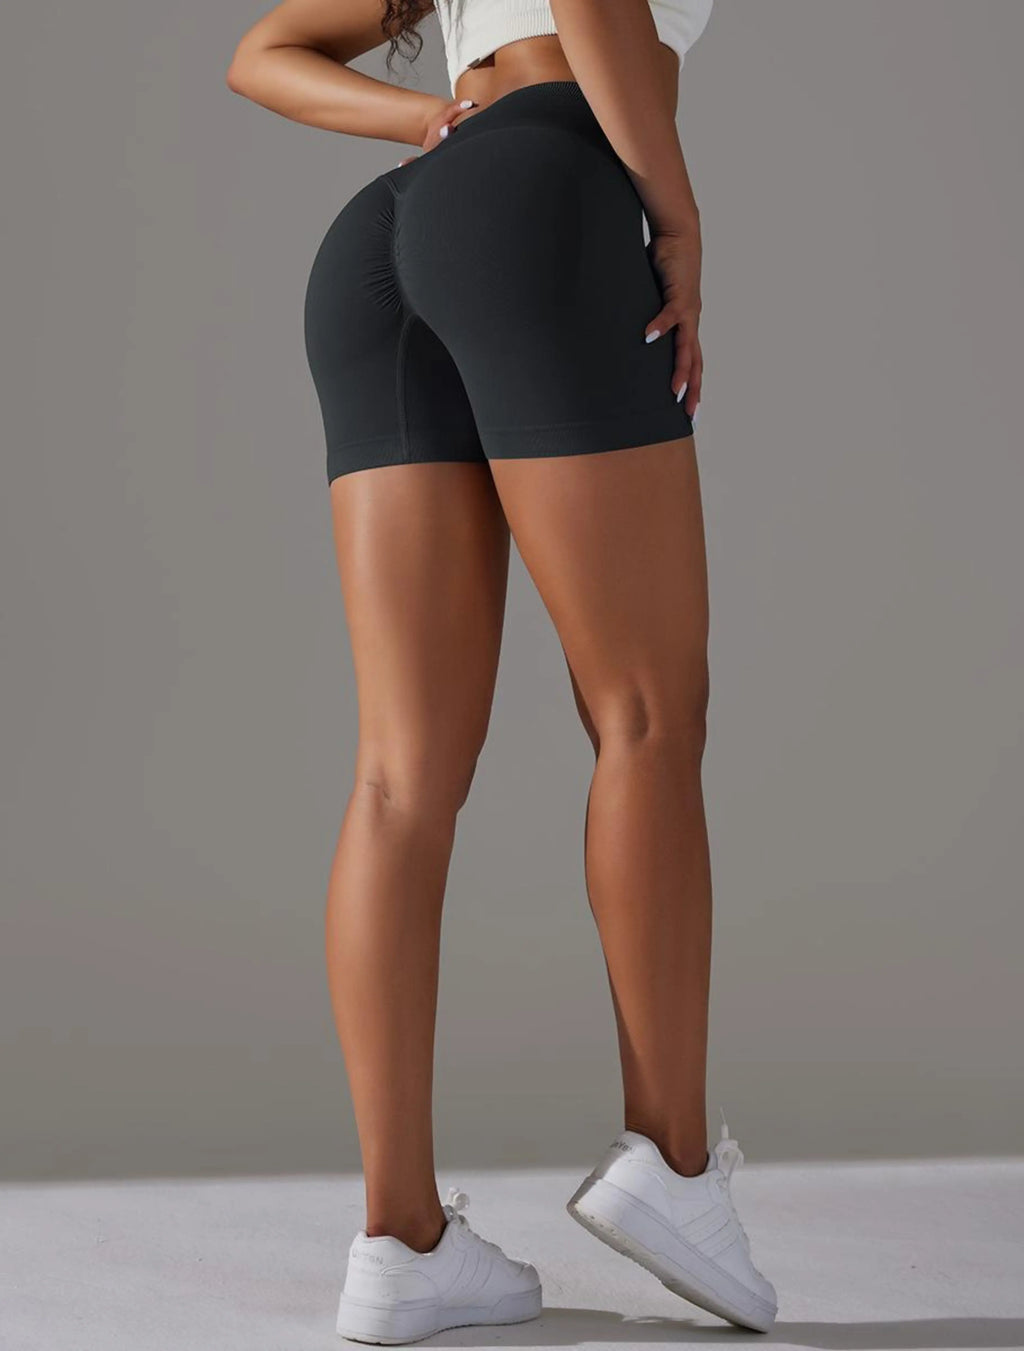 Miss Bey Booty Shorts Fightlab